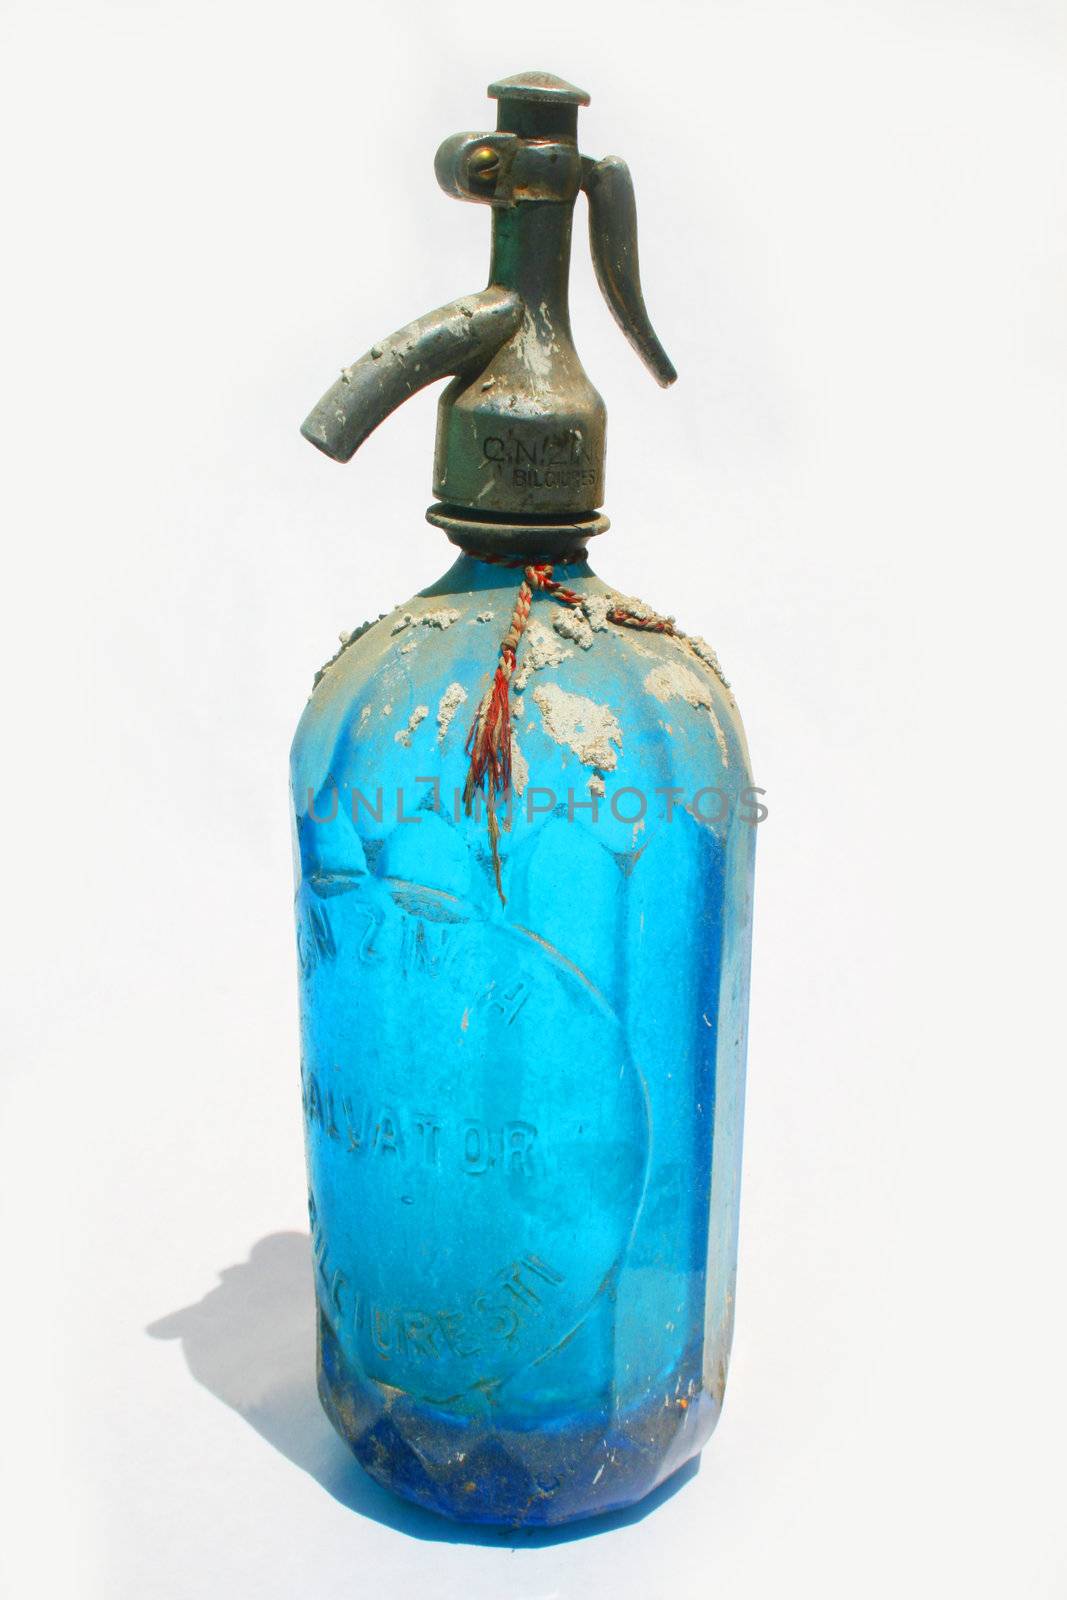 Seltzer bottle by timscottrom